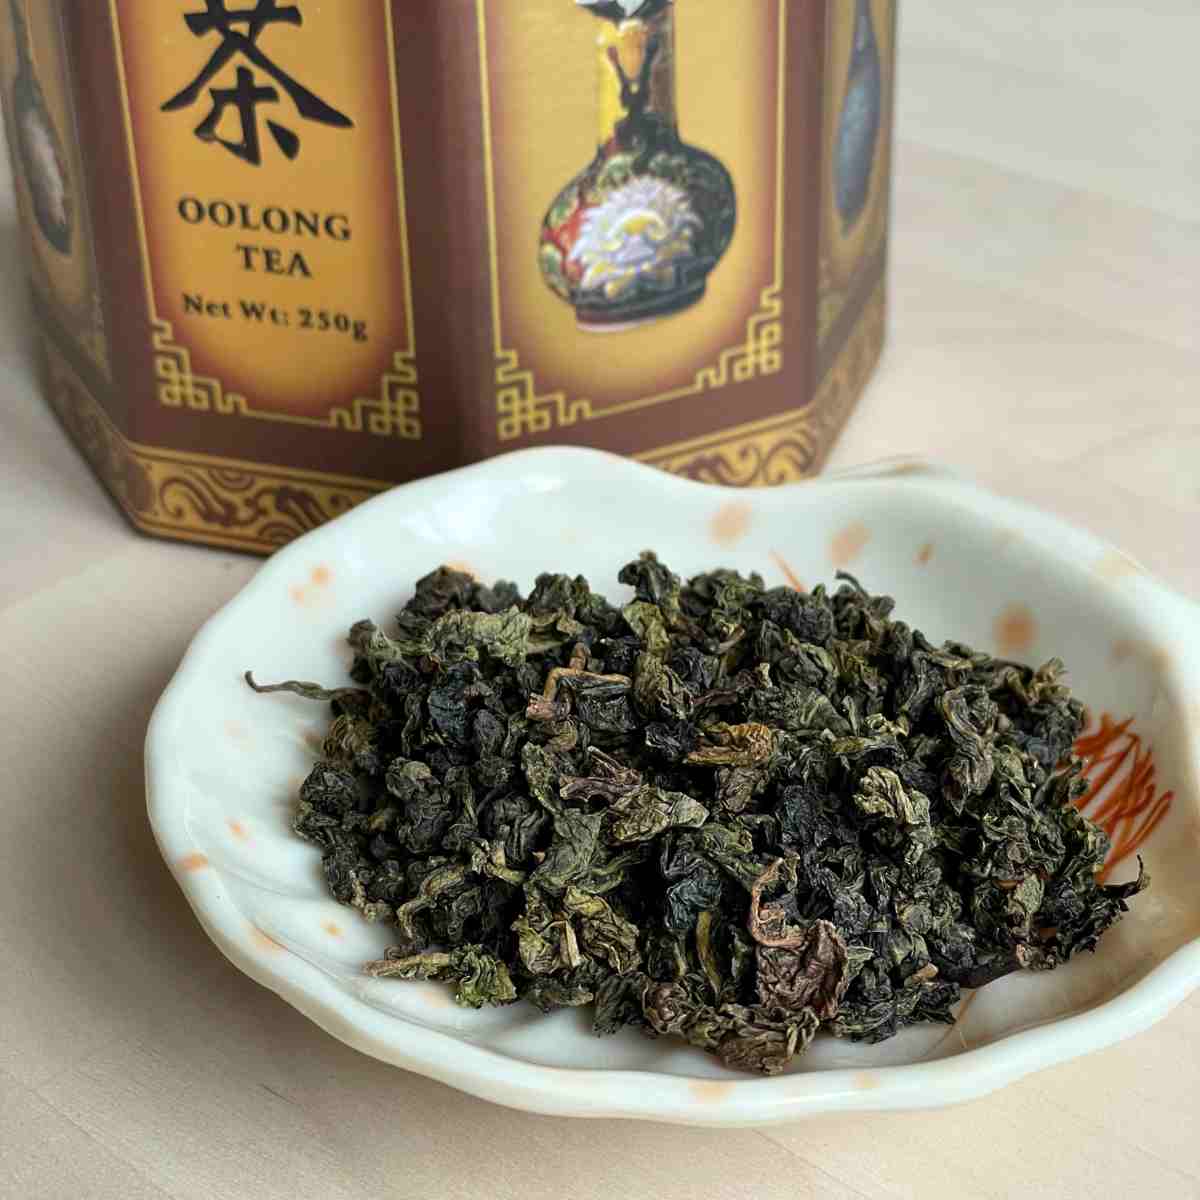 Oolong tea leaves